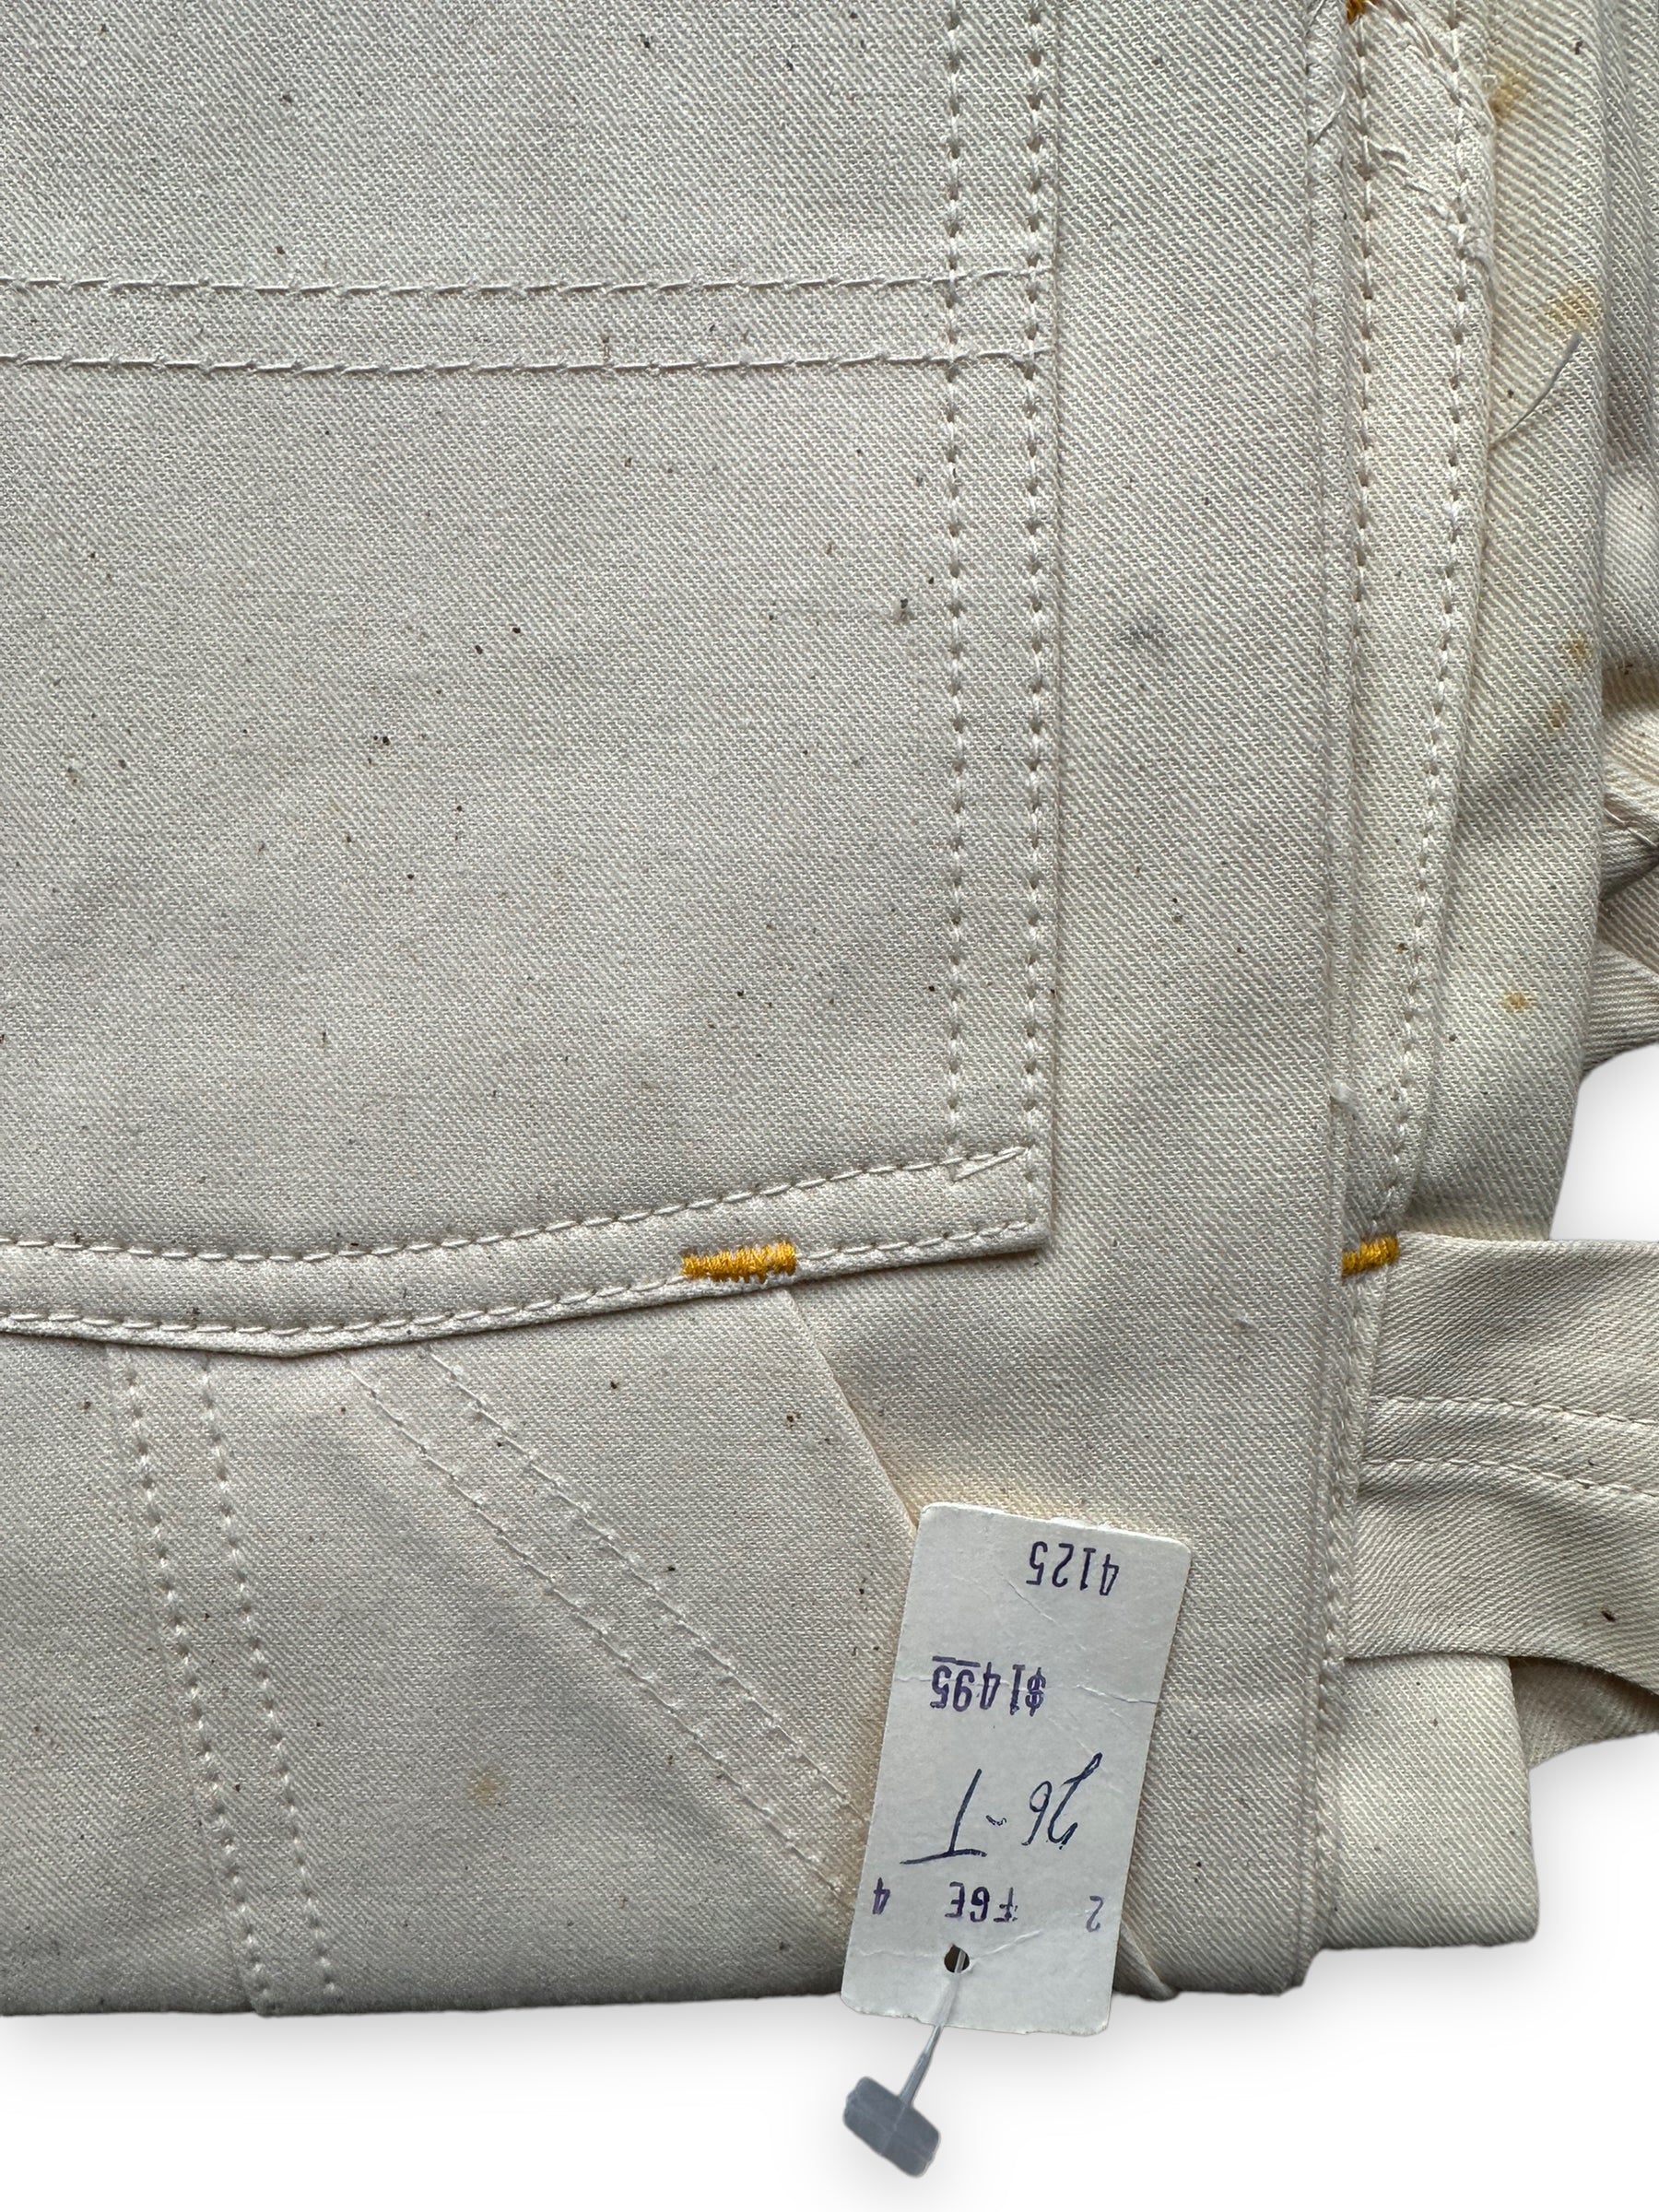 Original Sales Tag on NOS Vintage Carter's Ecru Painters Pants W26T | Vintage Workwear Seattle | Barn Owl Vintage Clothing